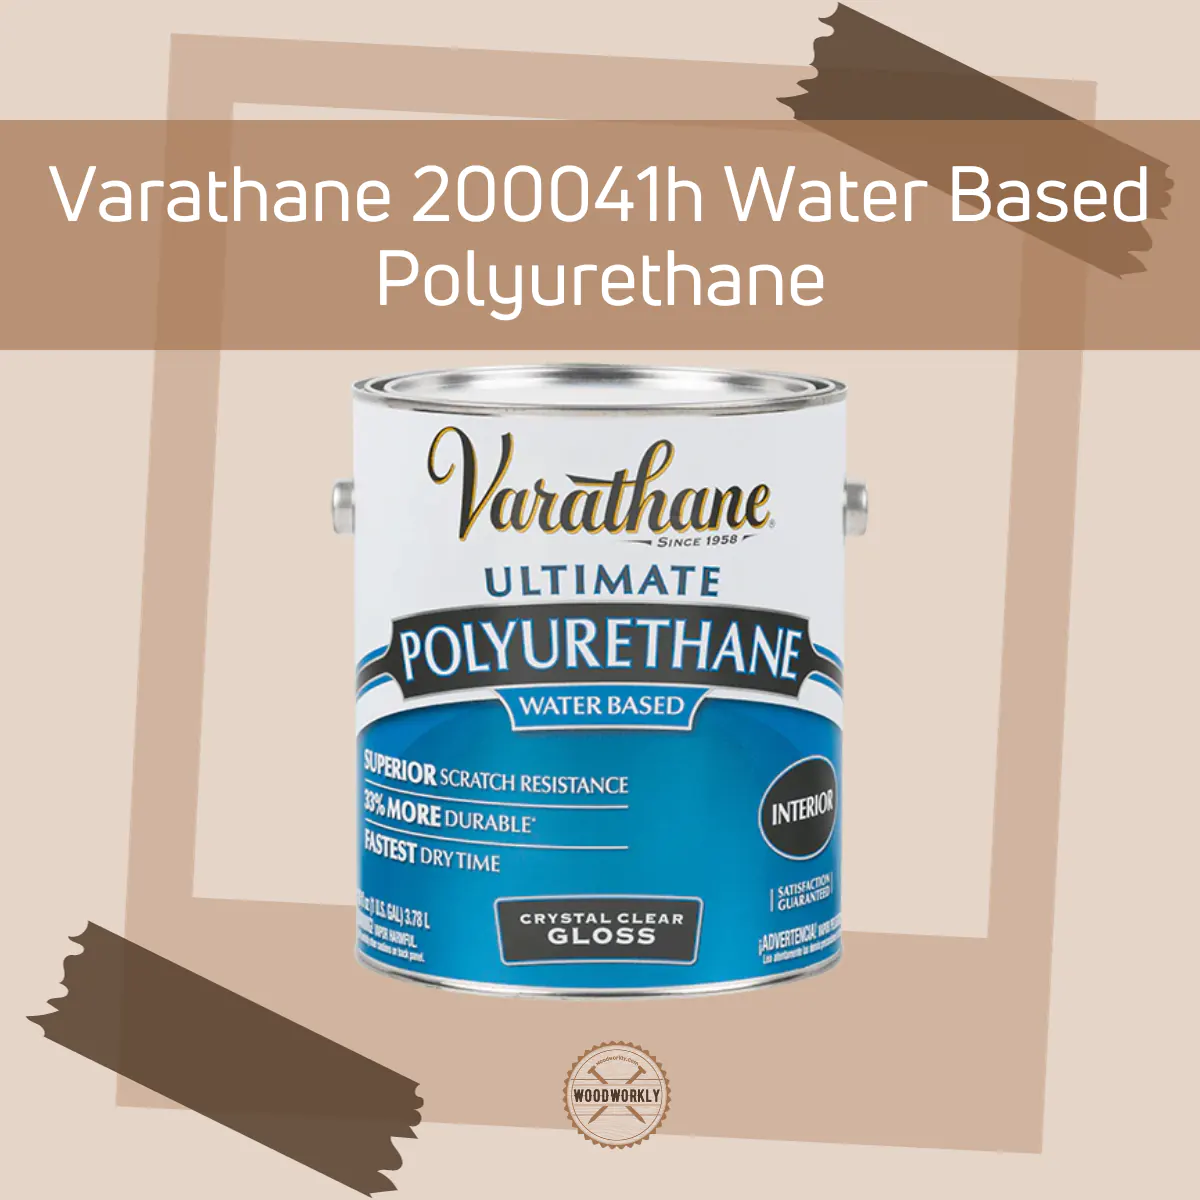 Varathane 200041h Water Based Polyurethane